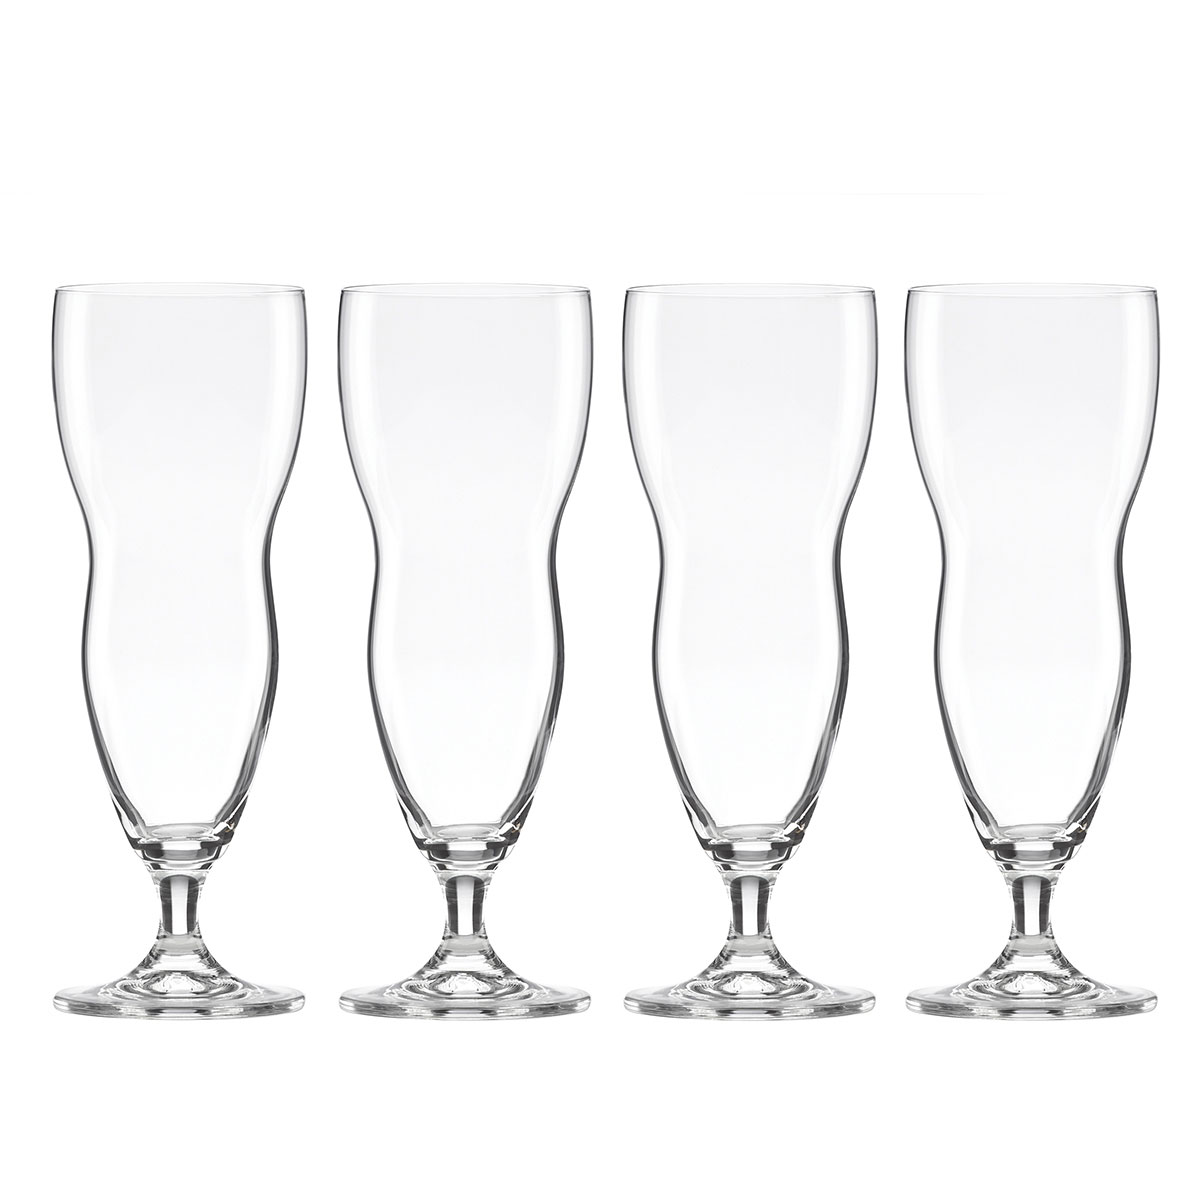 Lenox Tuscany Classics, Crystal Smoothie Crystal Glasses, Set of 4